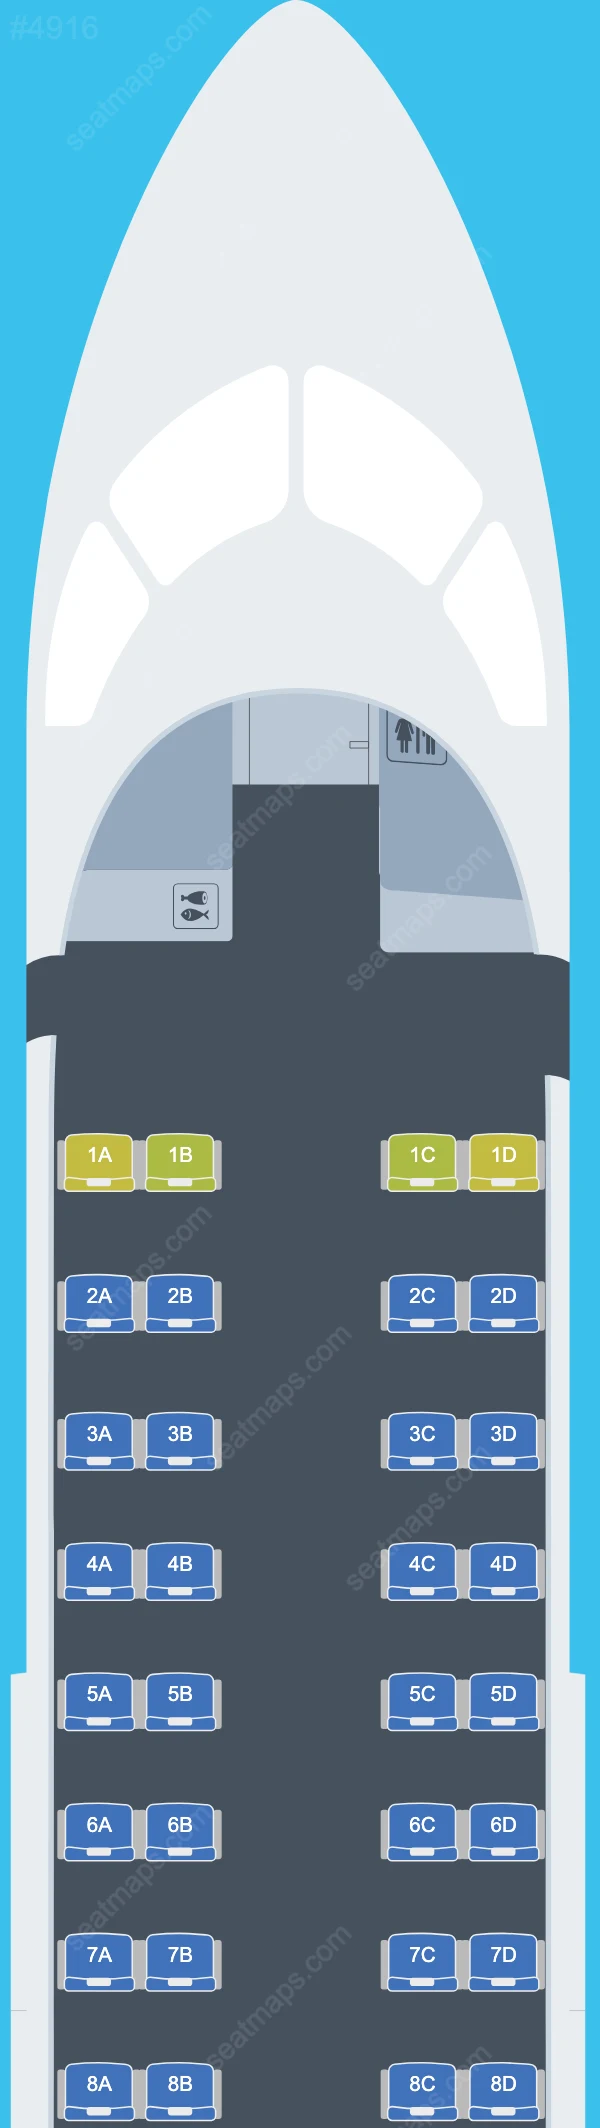 Air Creebec Bombardier Q300 Plan de Salle Q300